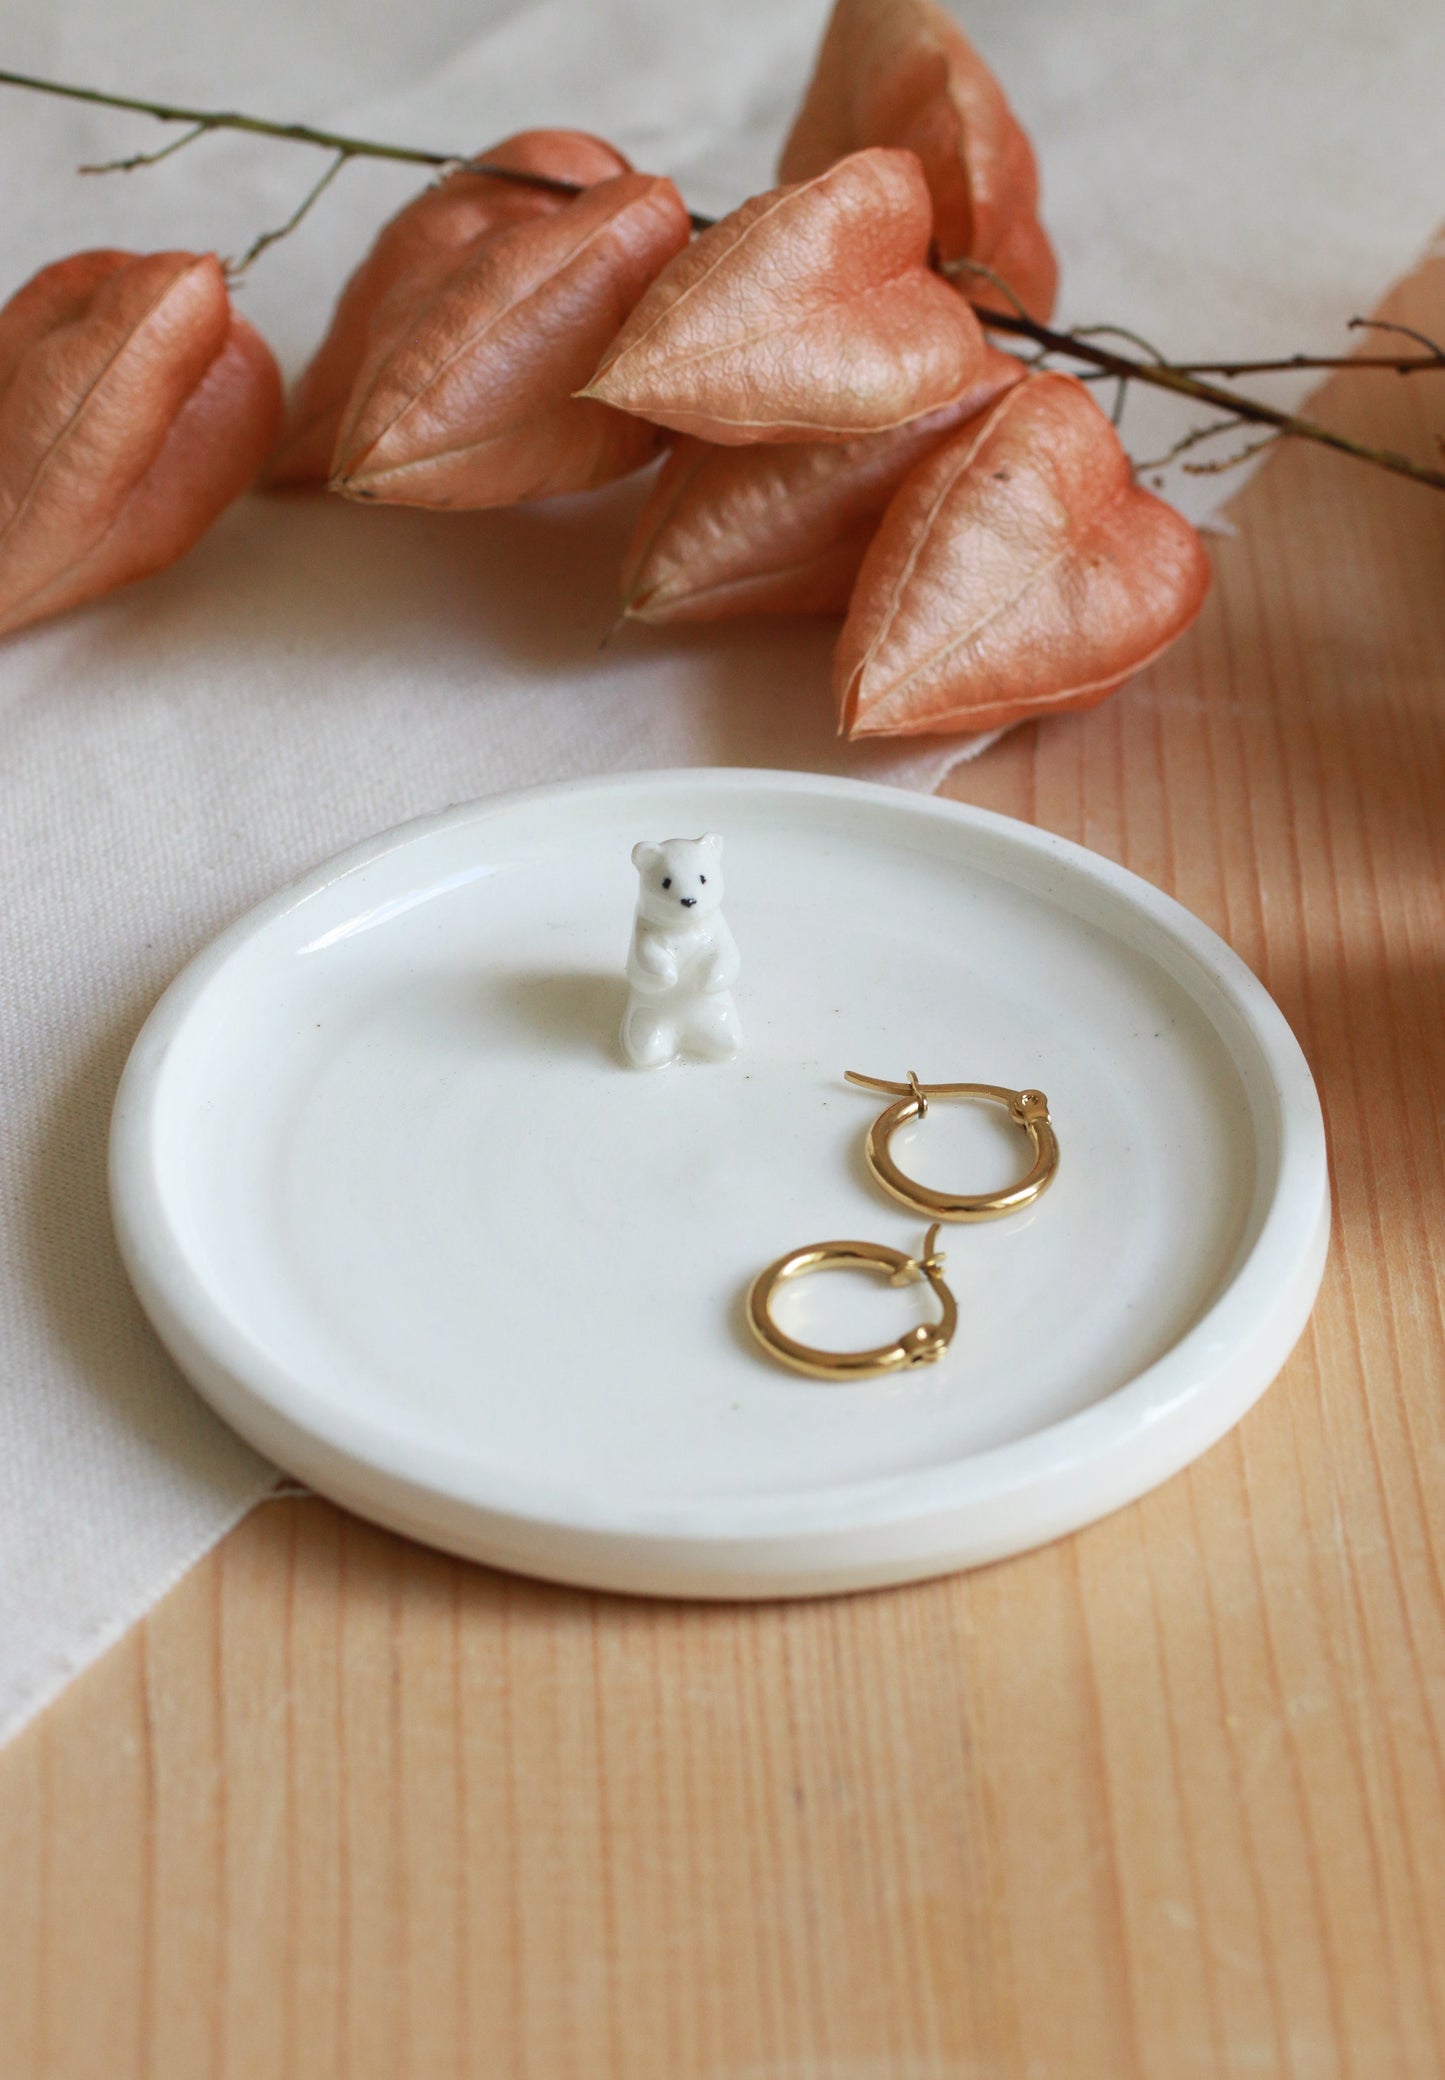 Bear Ring Dish / Jewelry Dish / Ceramic Trinket Dish